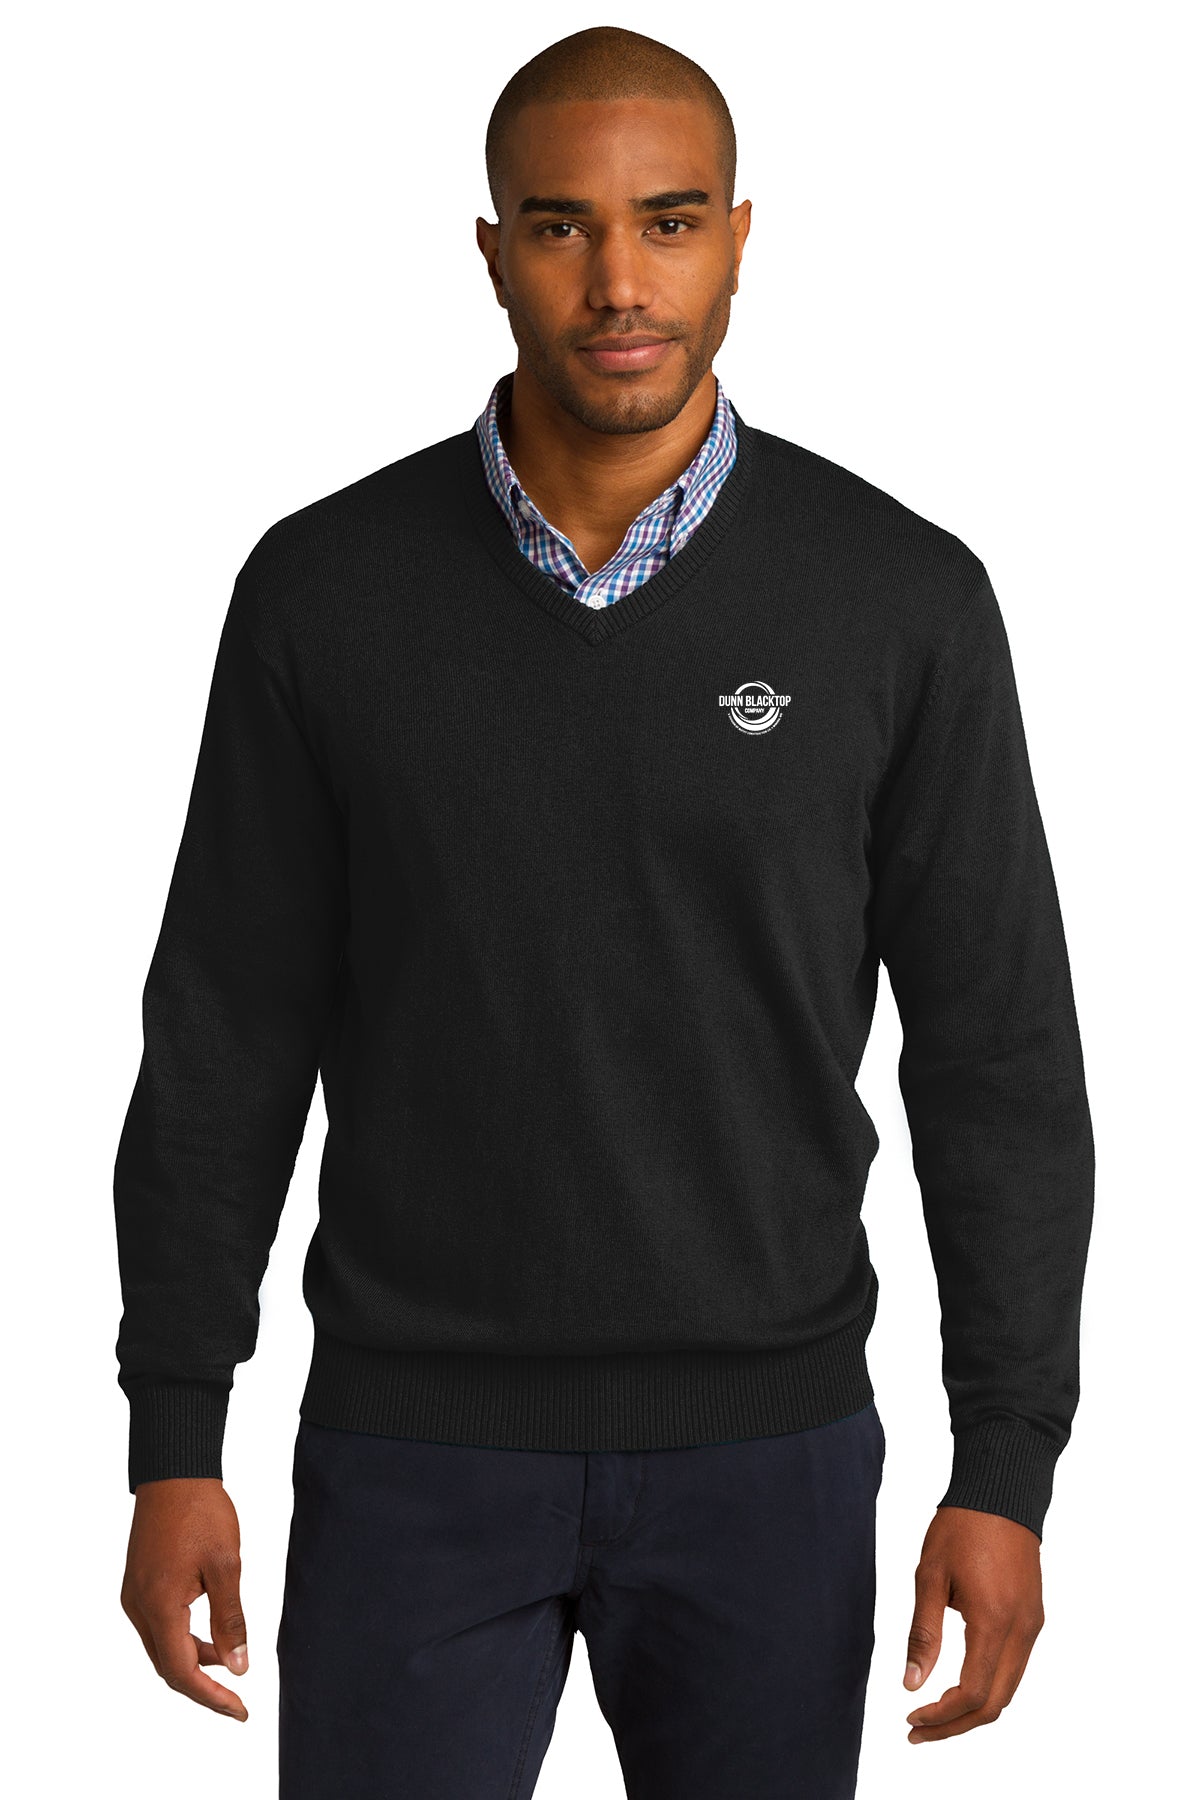 Dunn Blacktop Company V-Neck Sweater